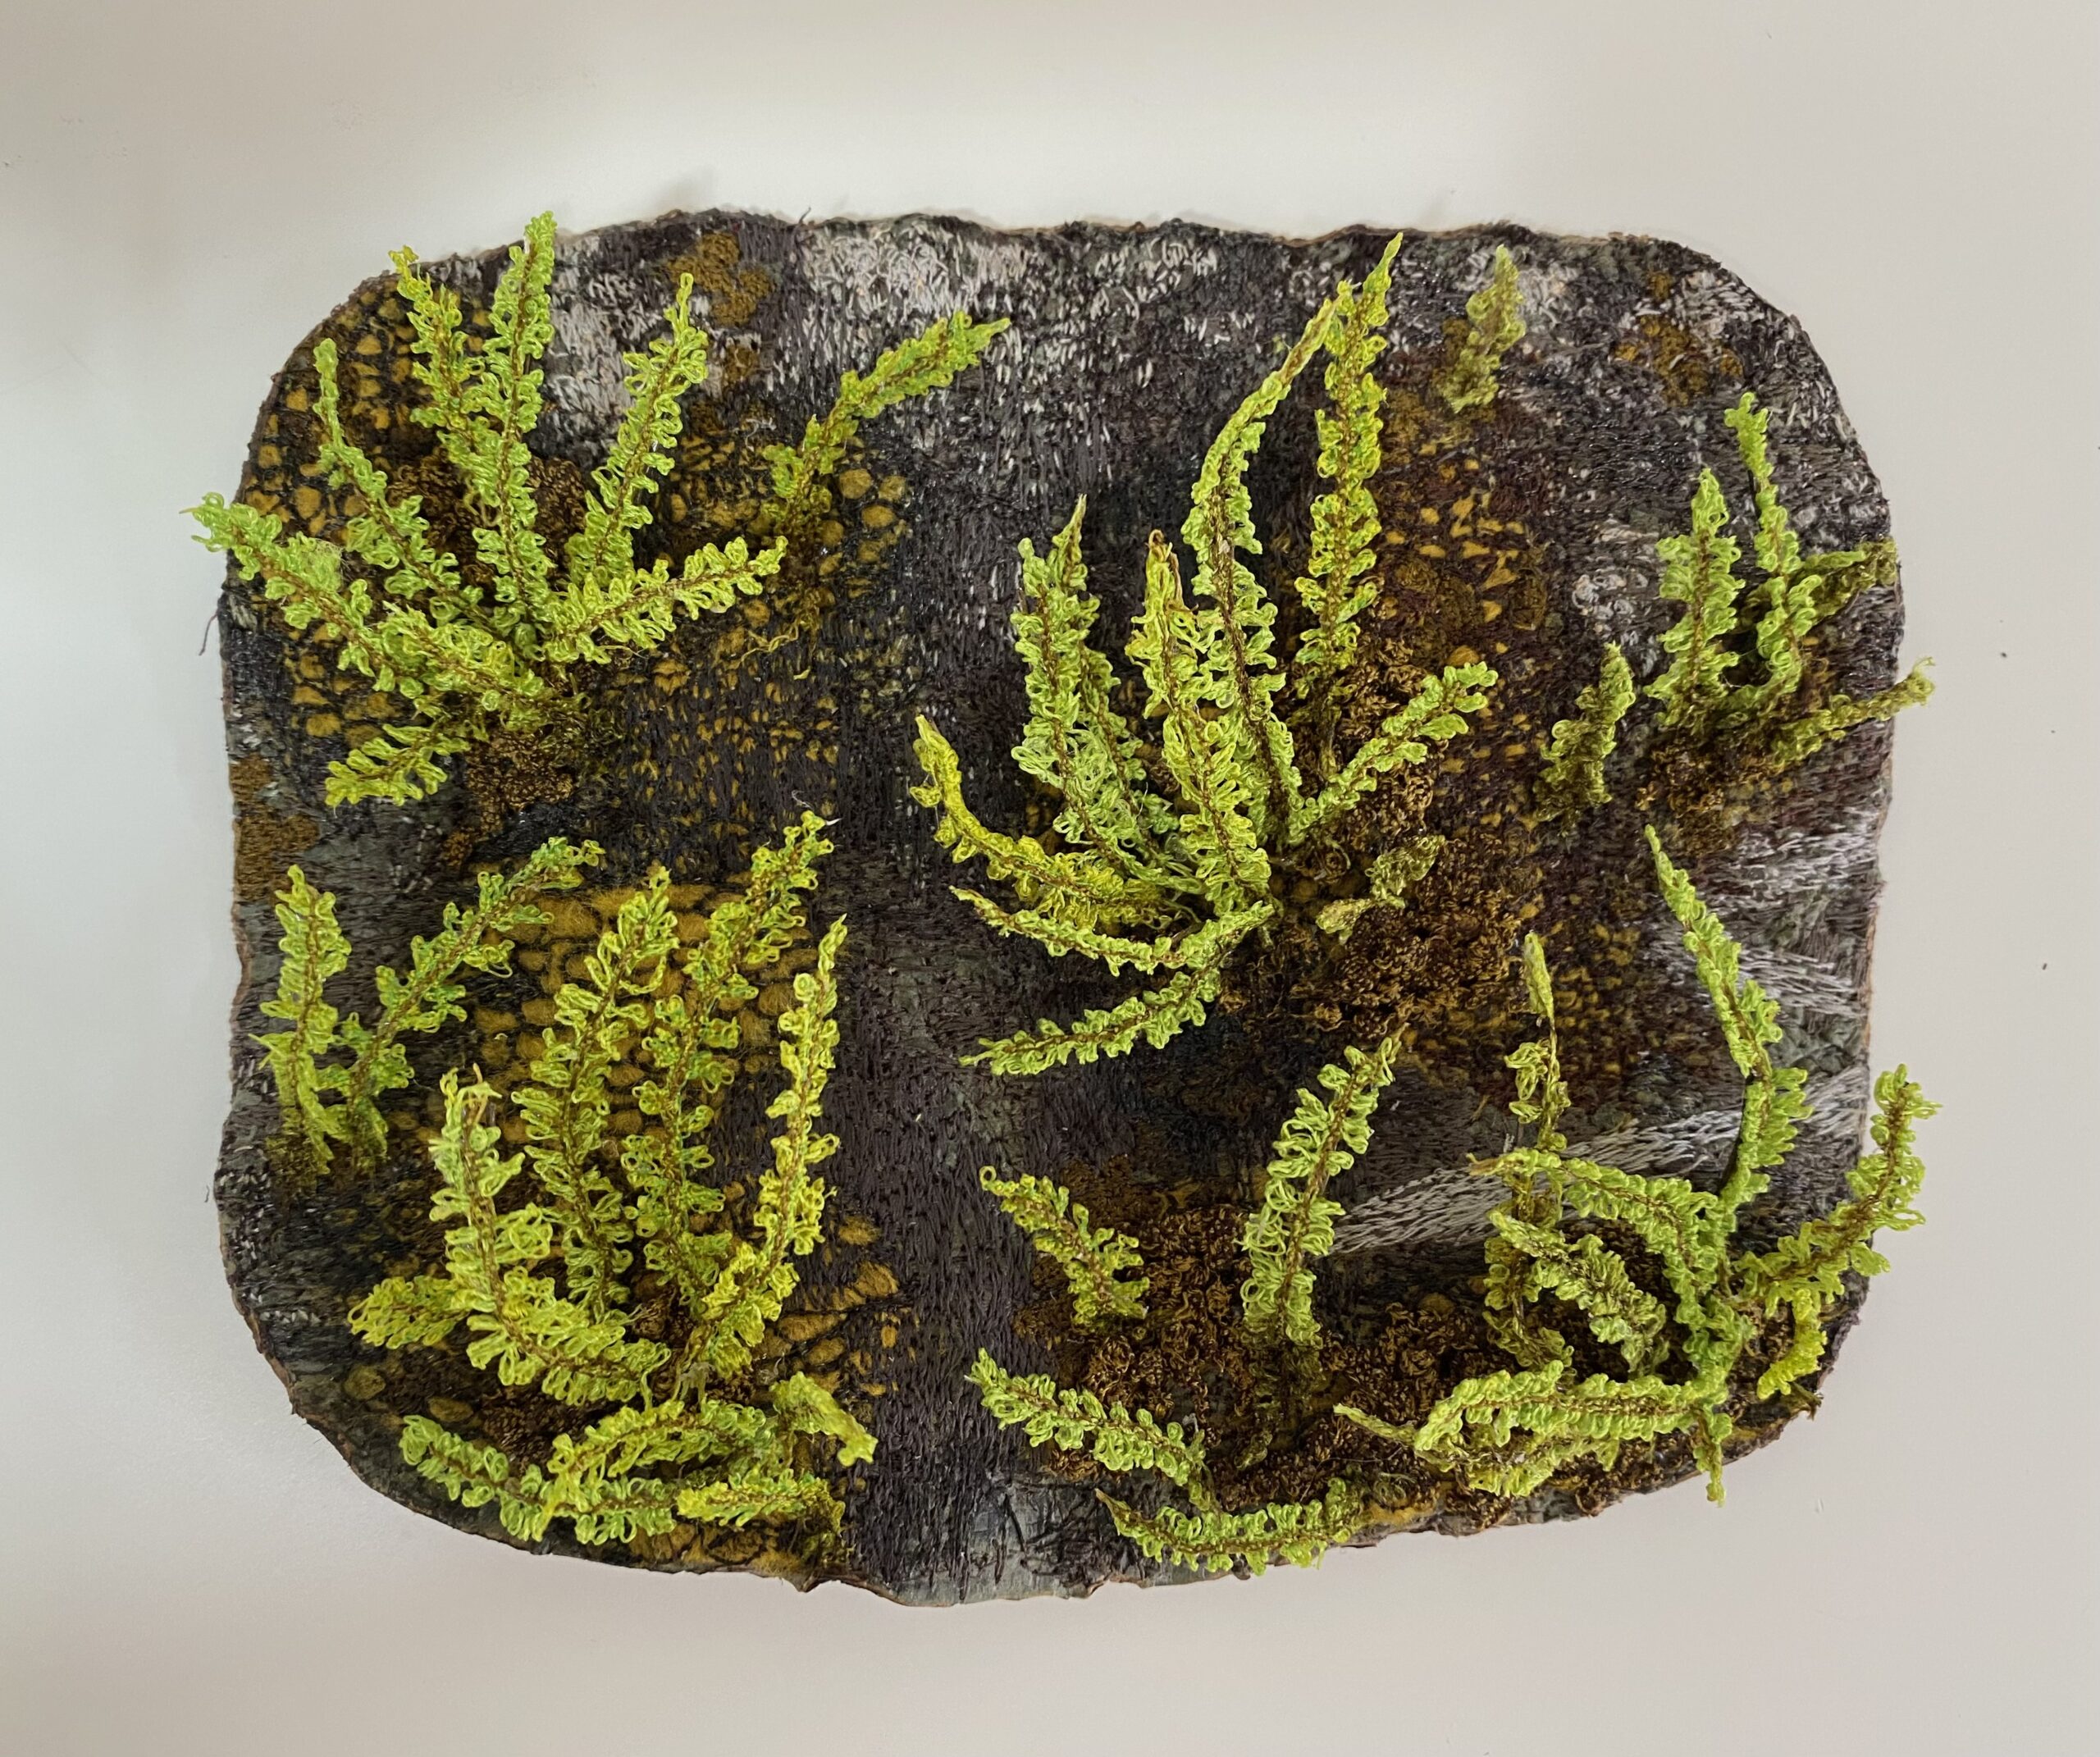 A realistic embroidery of maidenhair spleenwort